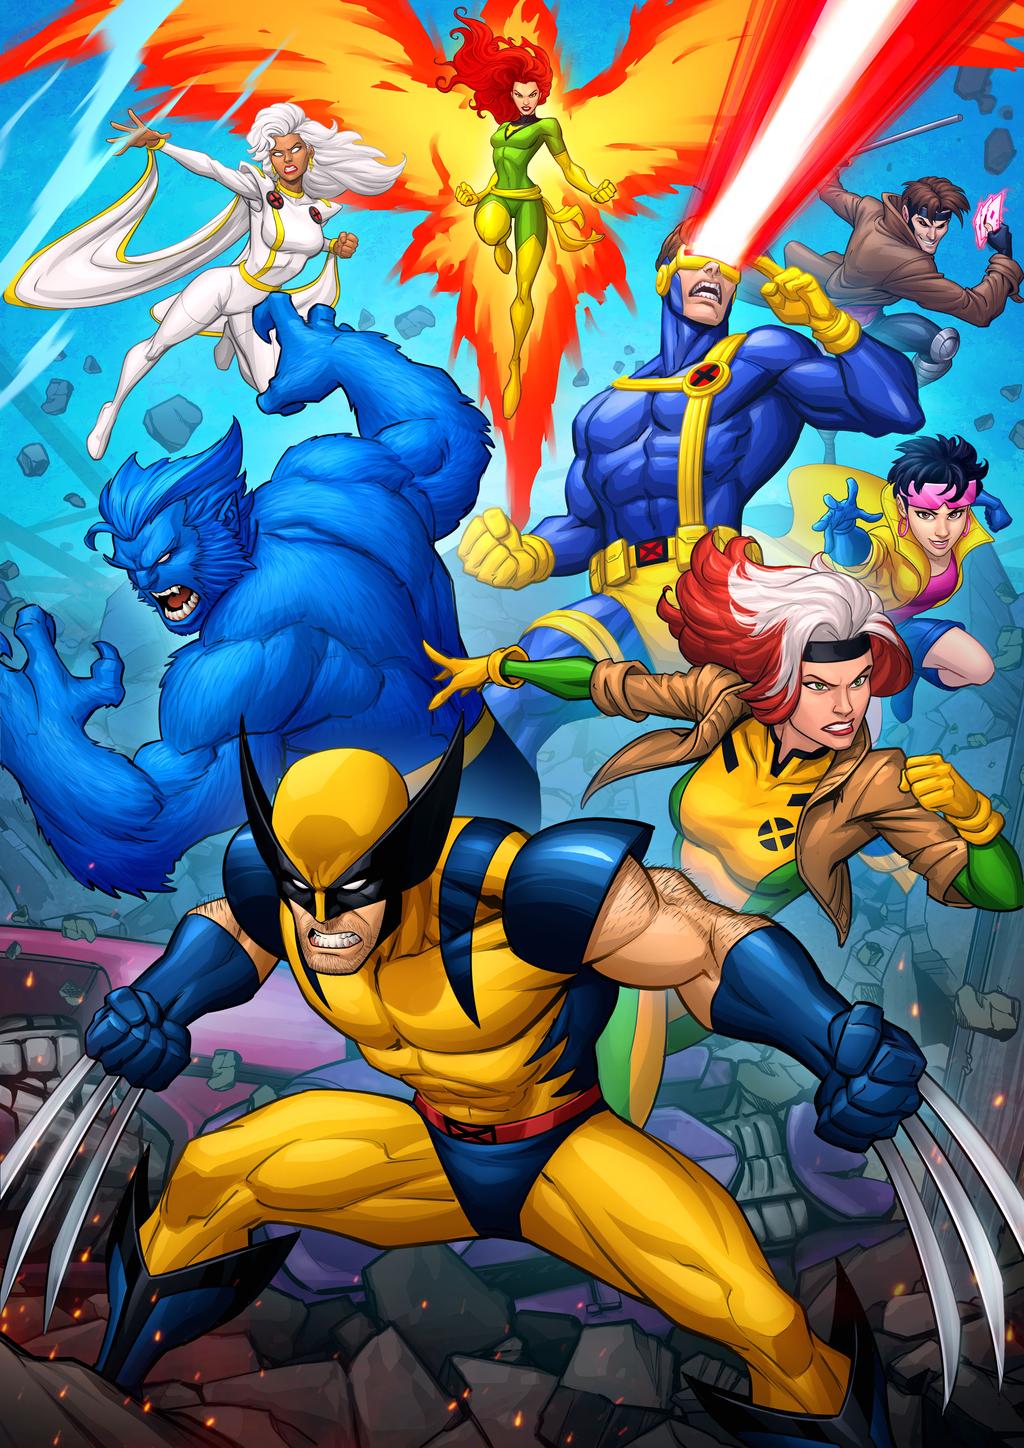 General 1024x1448 Patrick Brown fan art Wolverine X-Men Cyclops Jean Grey Gambit Storm (character) Beast (character) Rogue (X-men) fire phoenix Jubilee